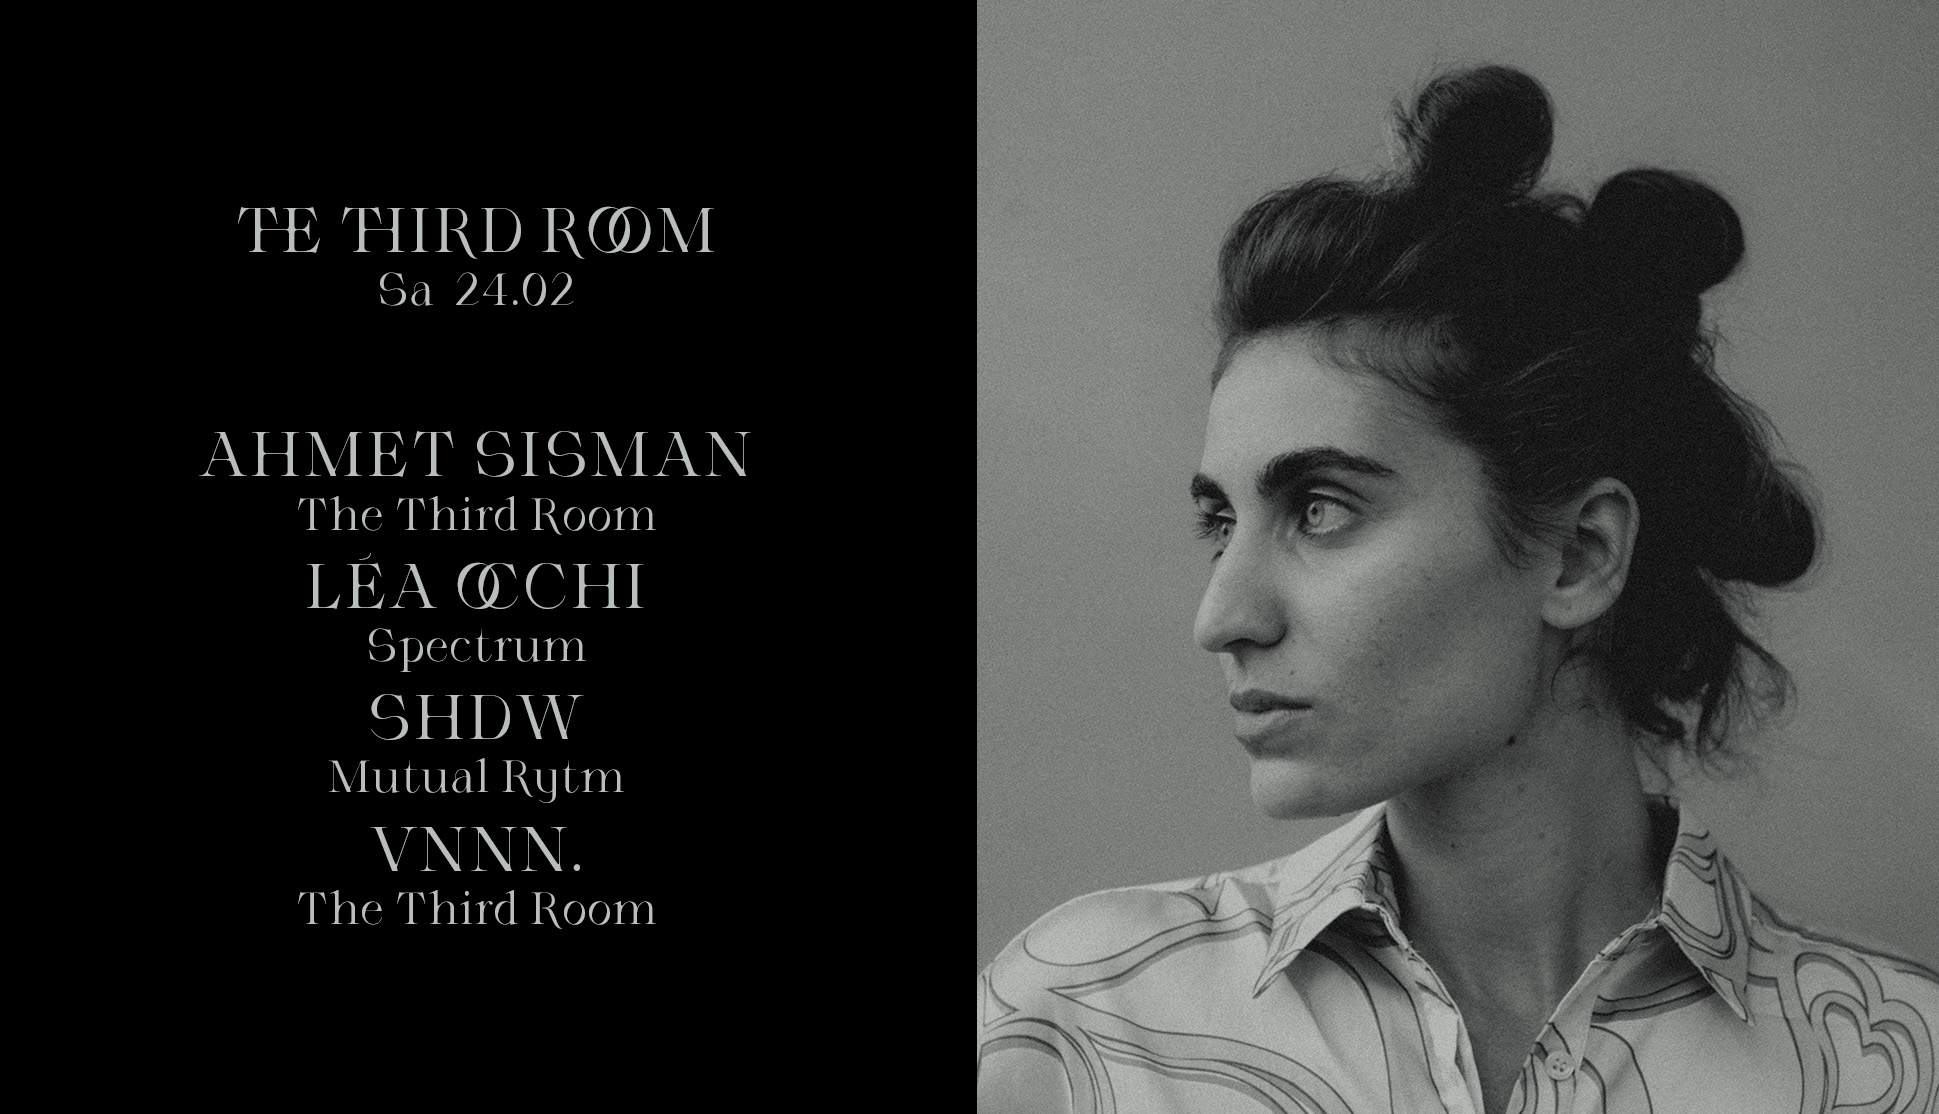 The Third Room with Ahmet Sisman, Léa Occhi, SHDW & VNNN - フライヤー表